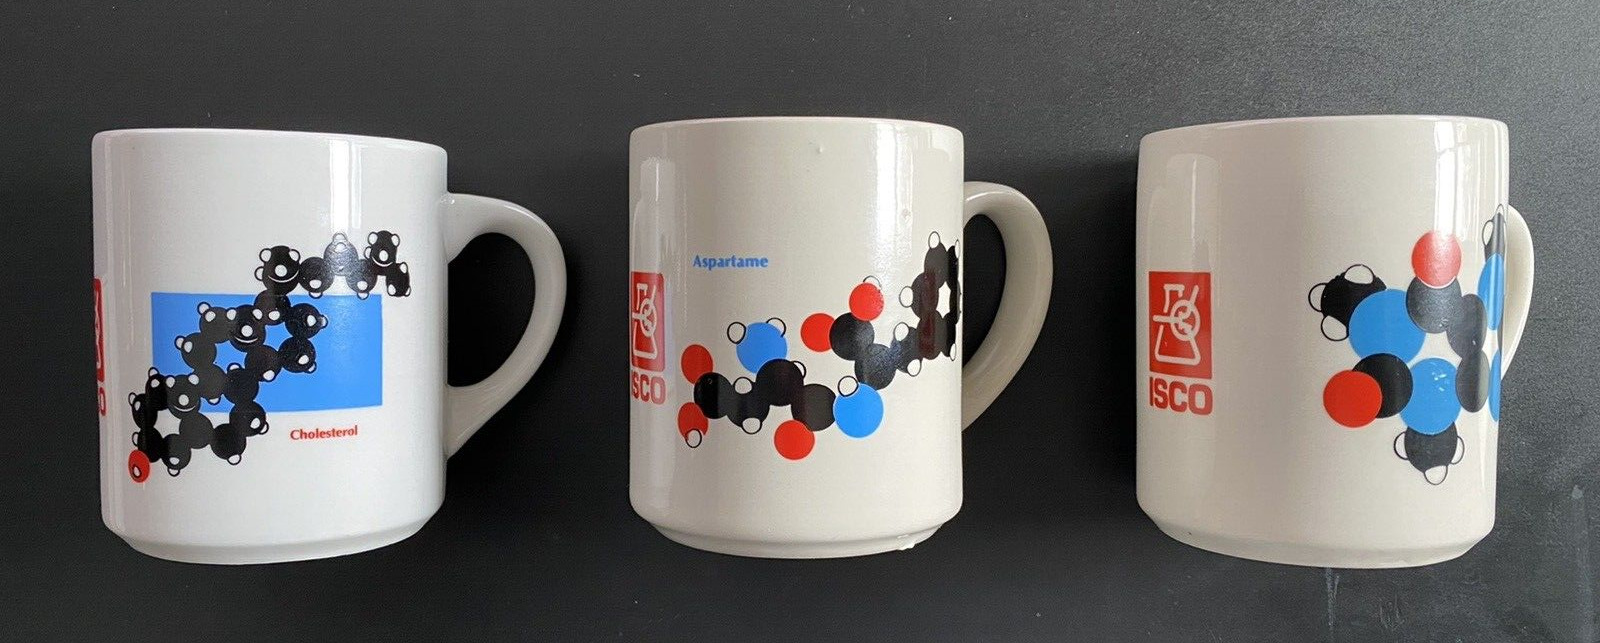 ISCO Coffee Mugs w/ Chem. Structures - Sucrose/Aspartame, Caffeine & Cholesterol